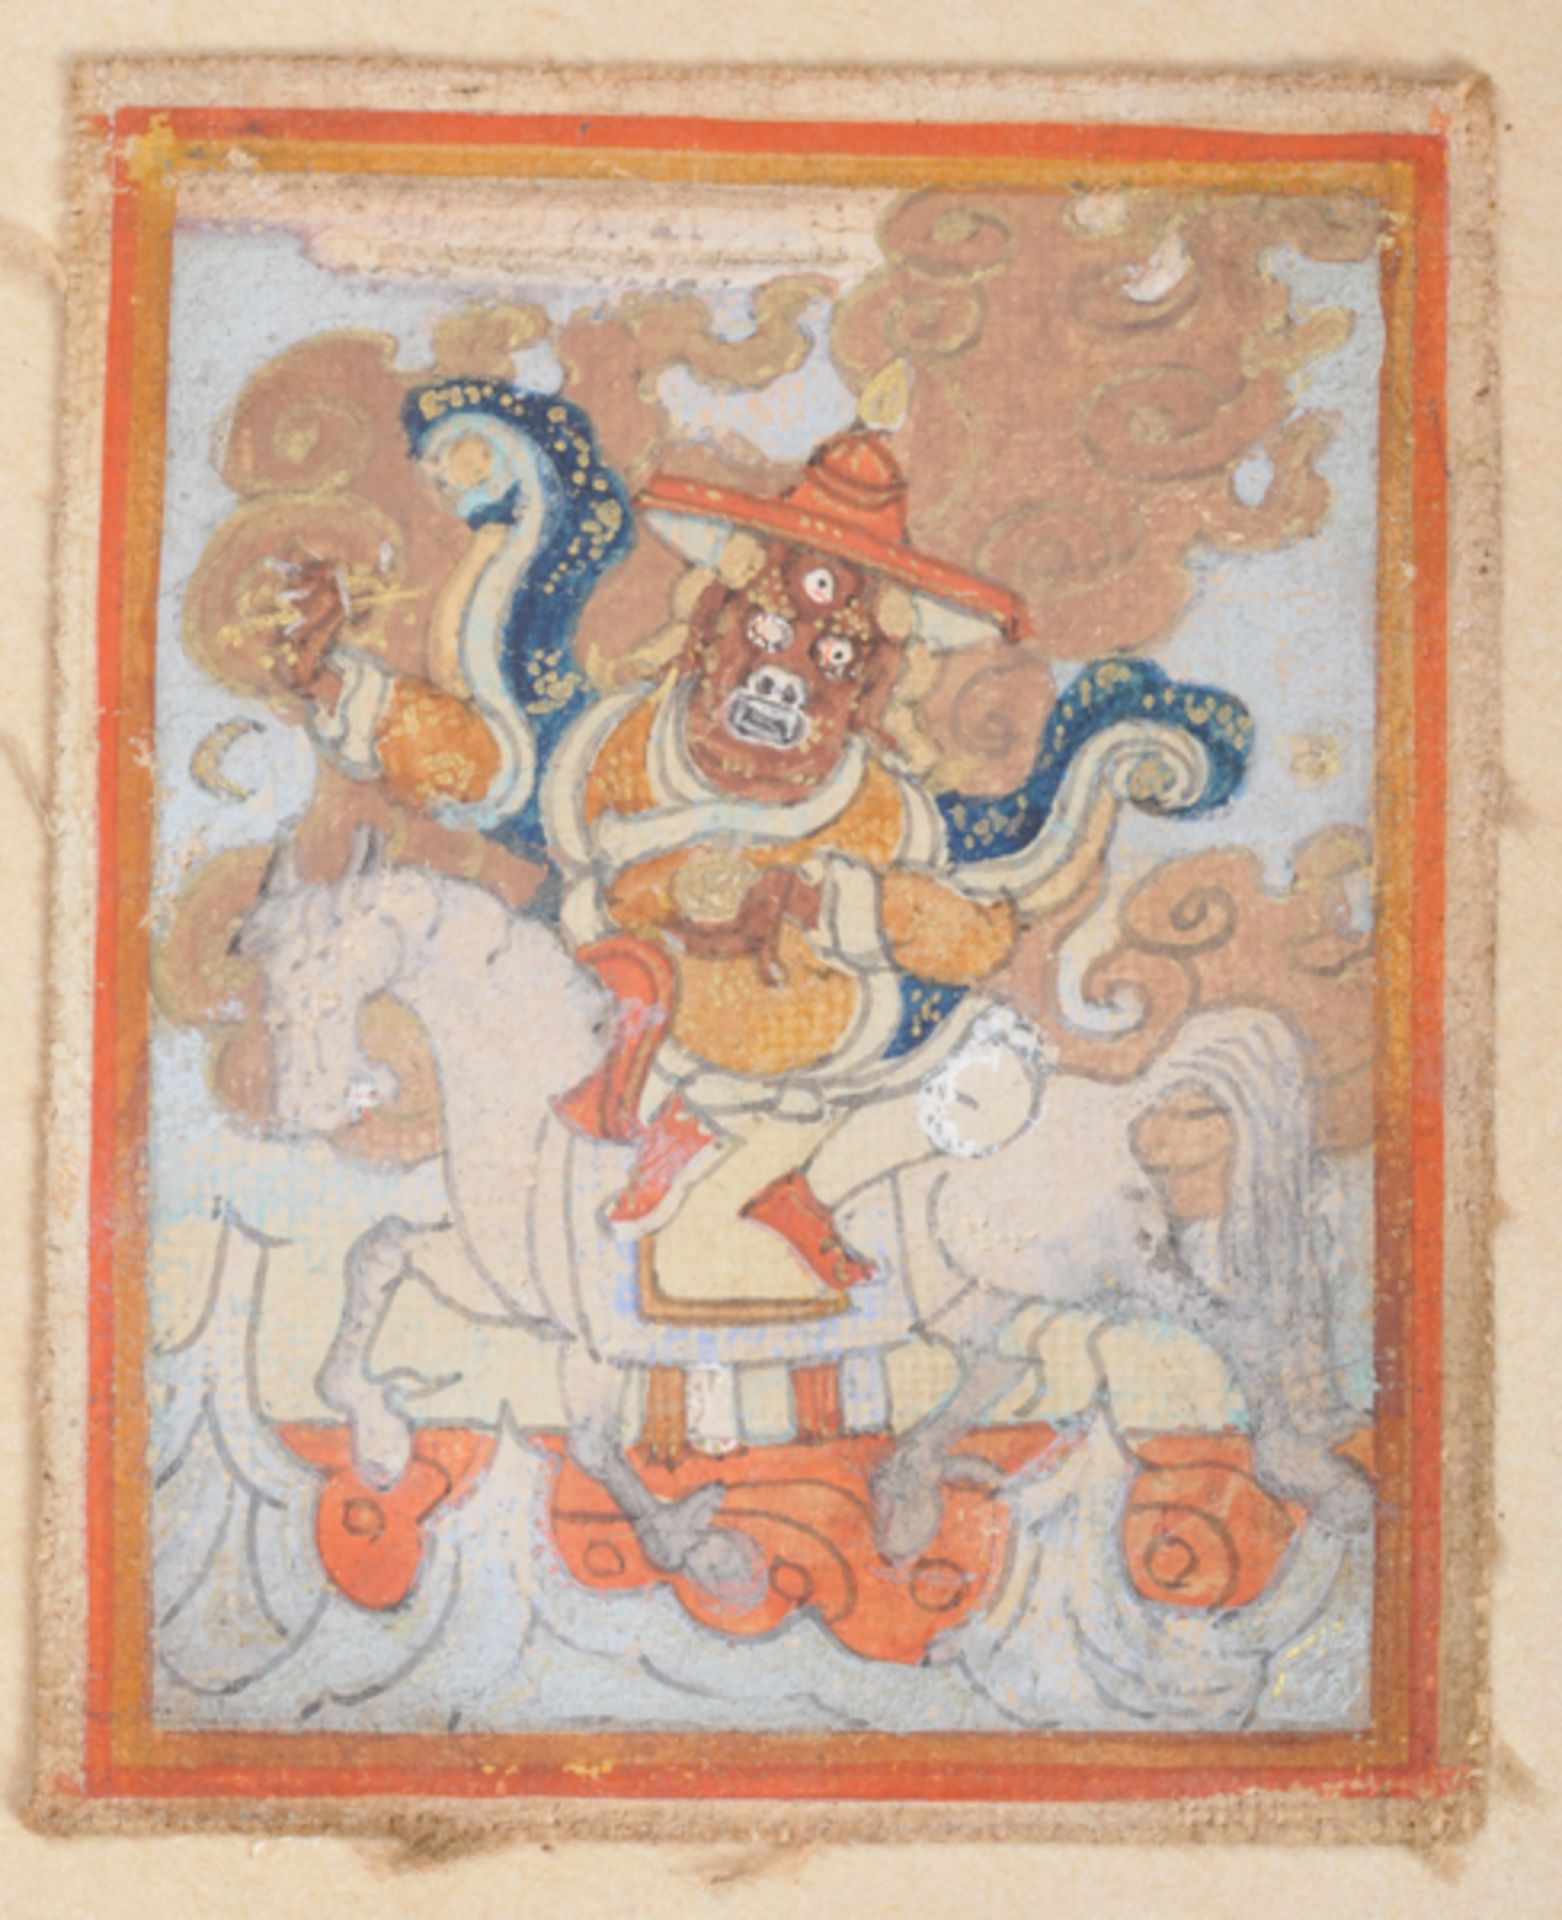 THANGKA-MINIATUR MIT VAJRASADHU
Farben auf Gewebe. Tibet, 19. bis frühes 20. Jh.Vajrasadhu,